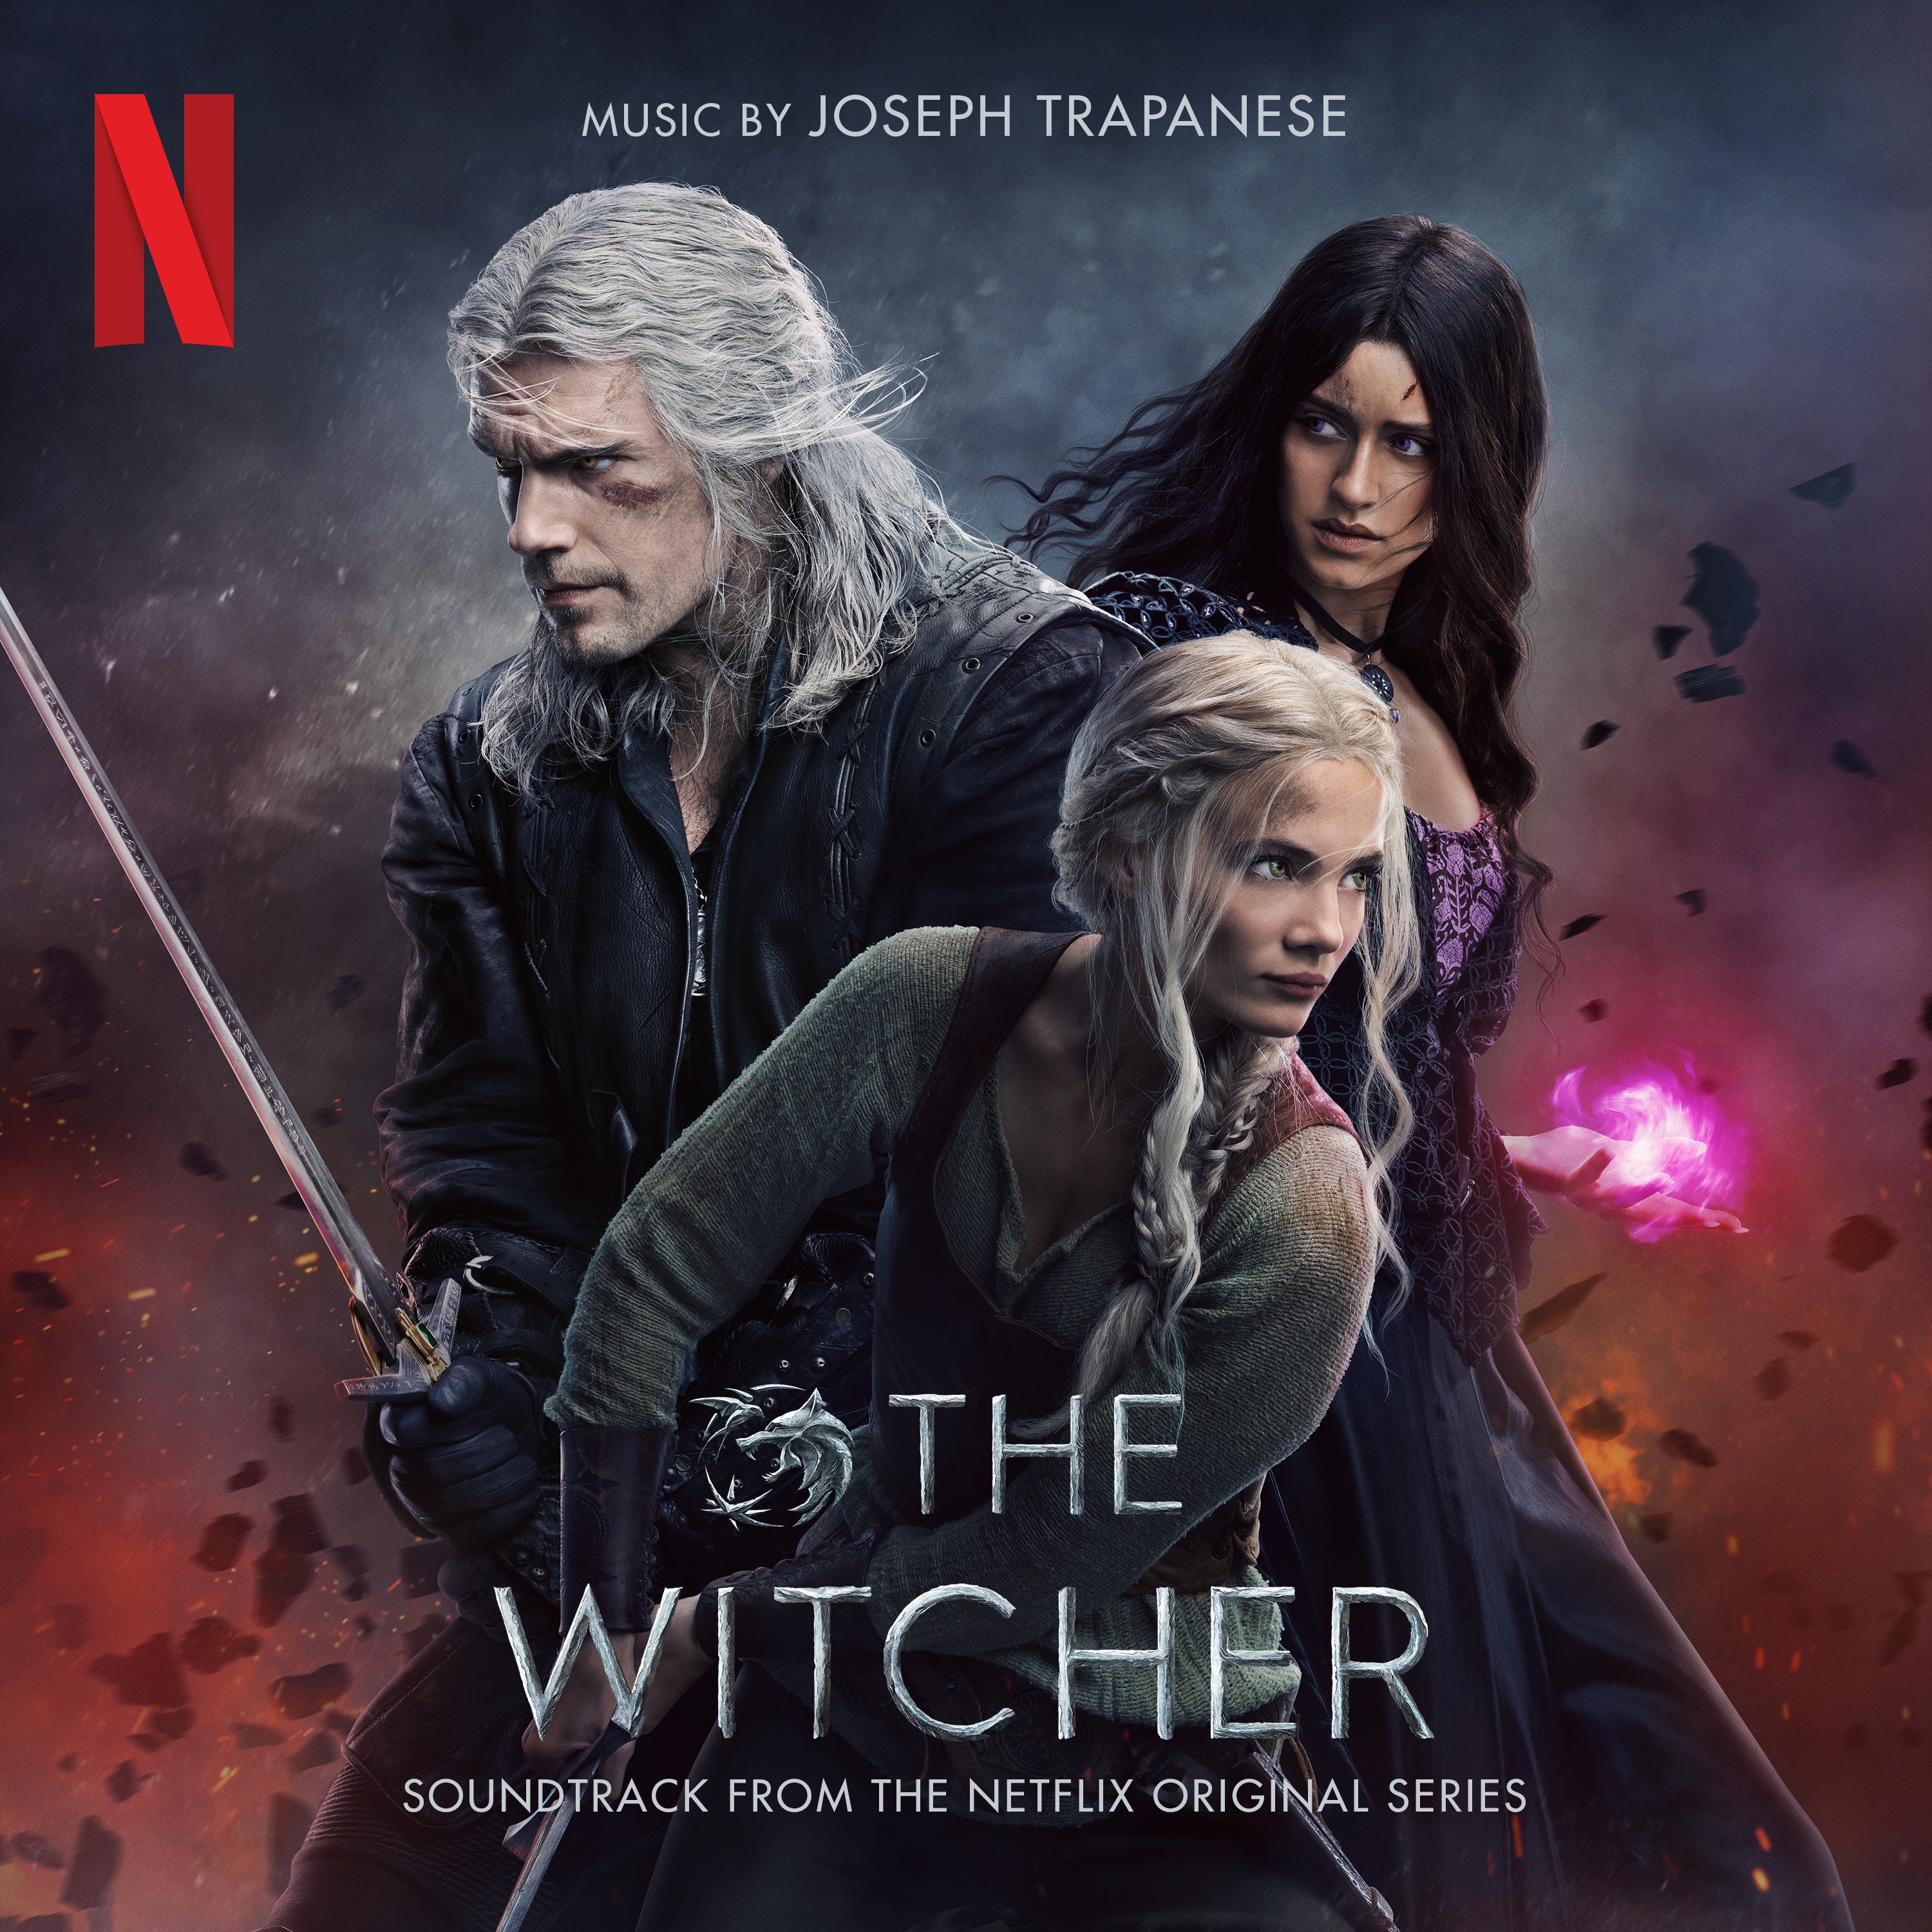 The witcher season 3 soundtrack (118) фото